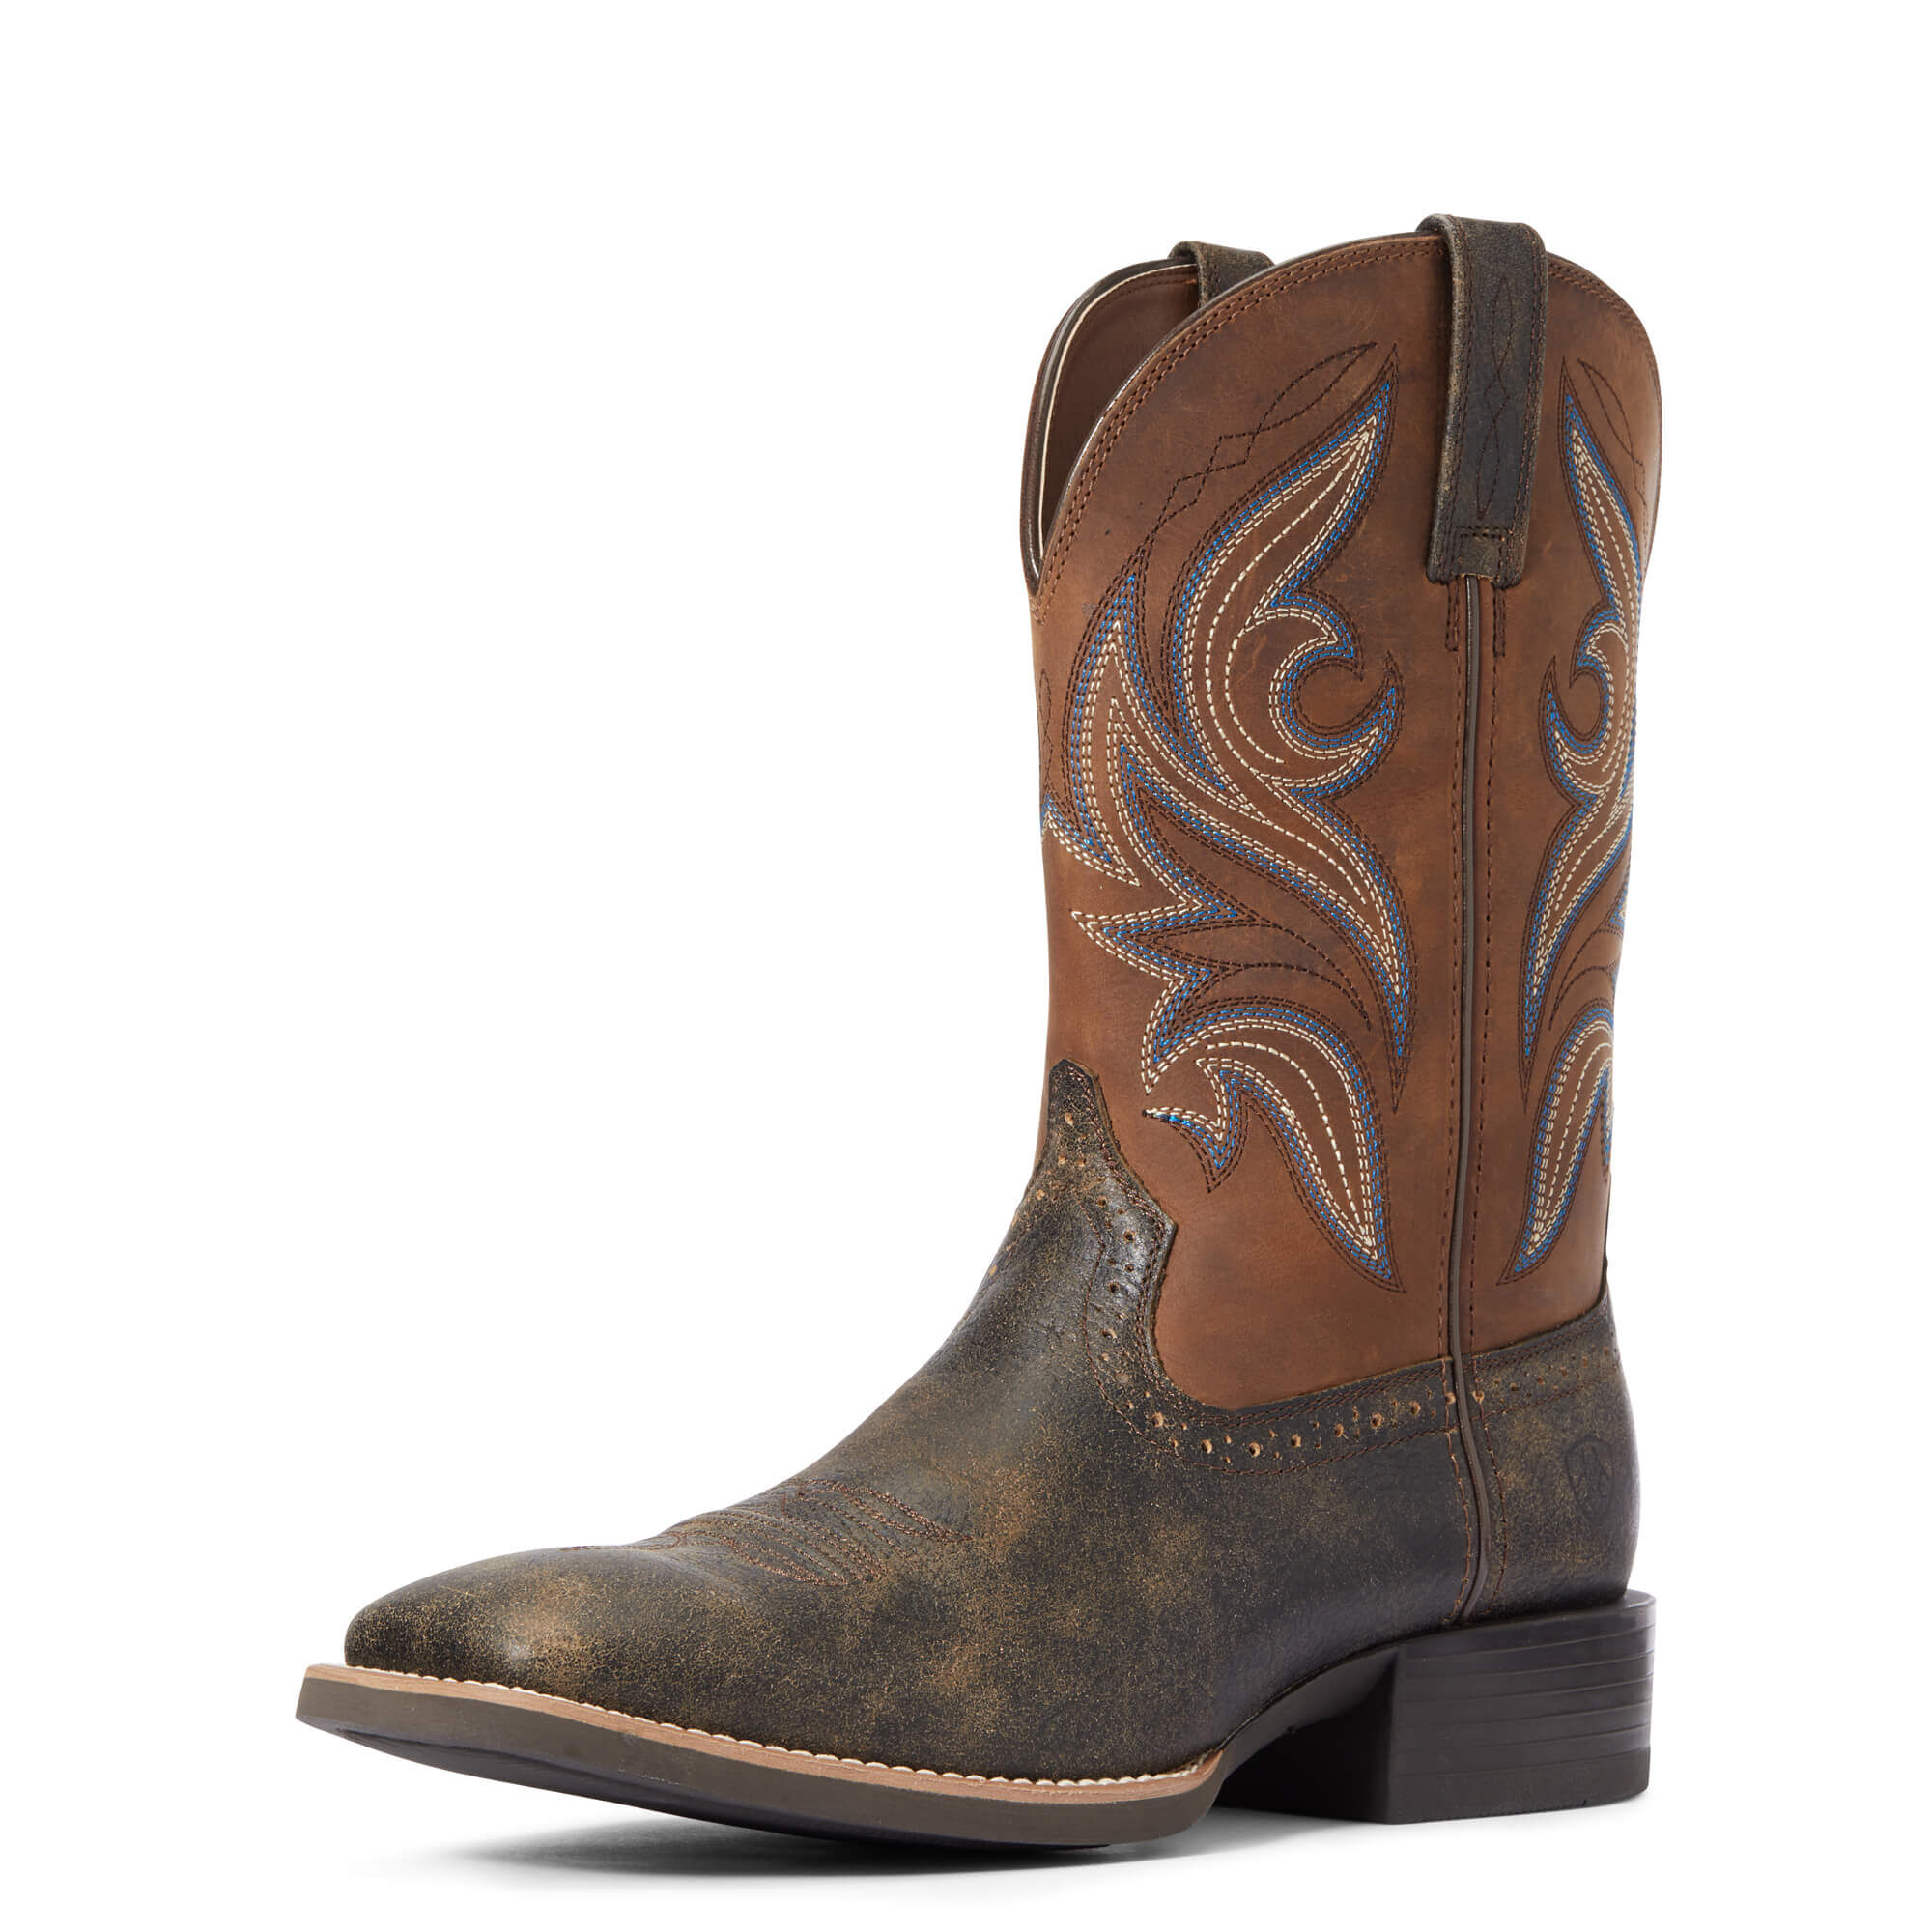 13 ee cowboy boots